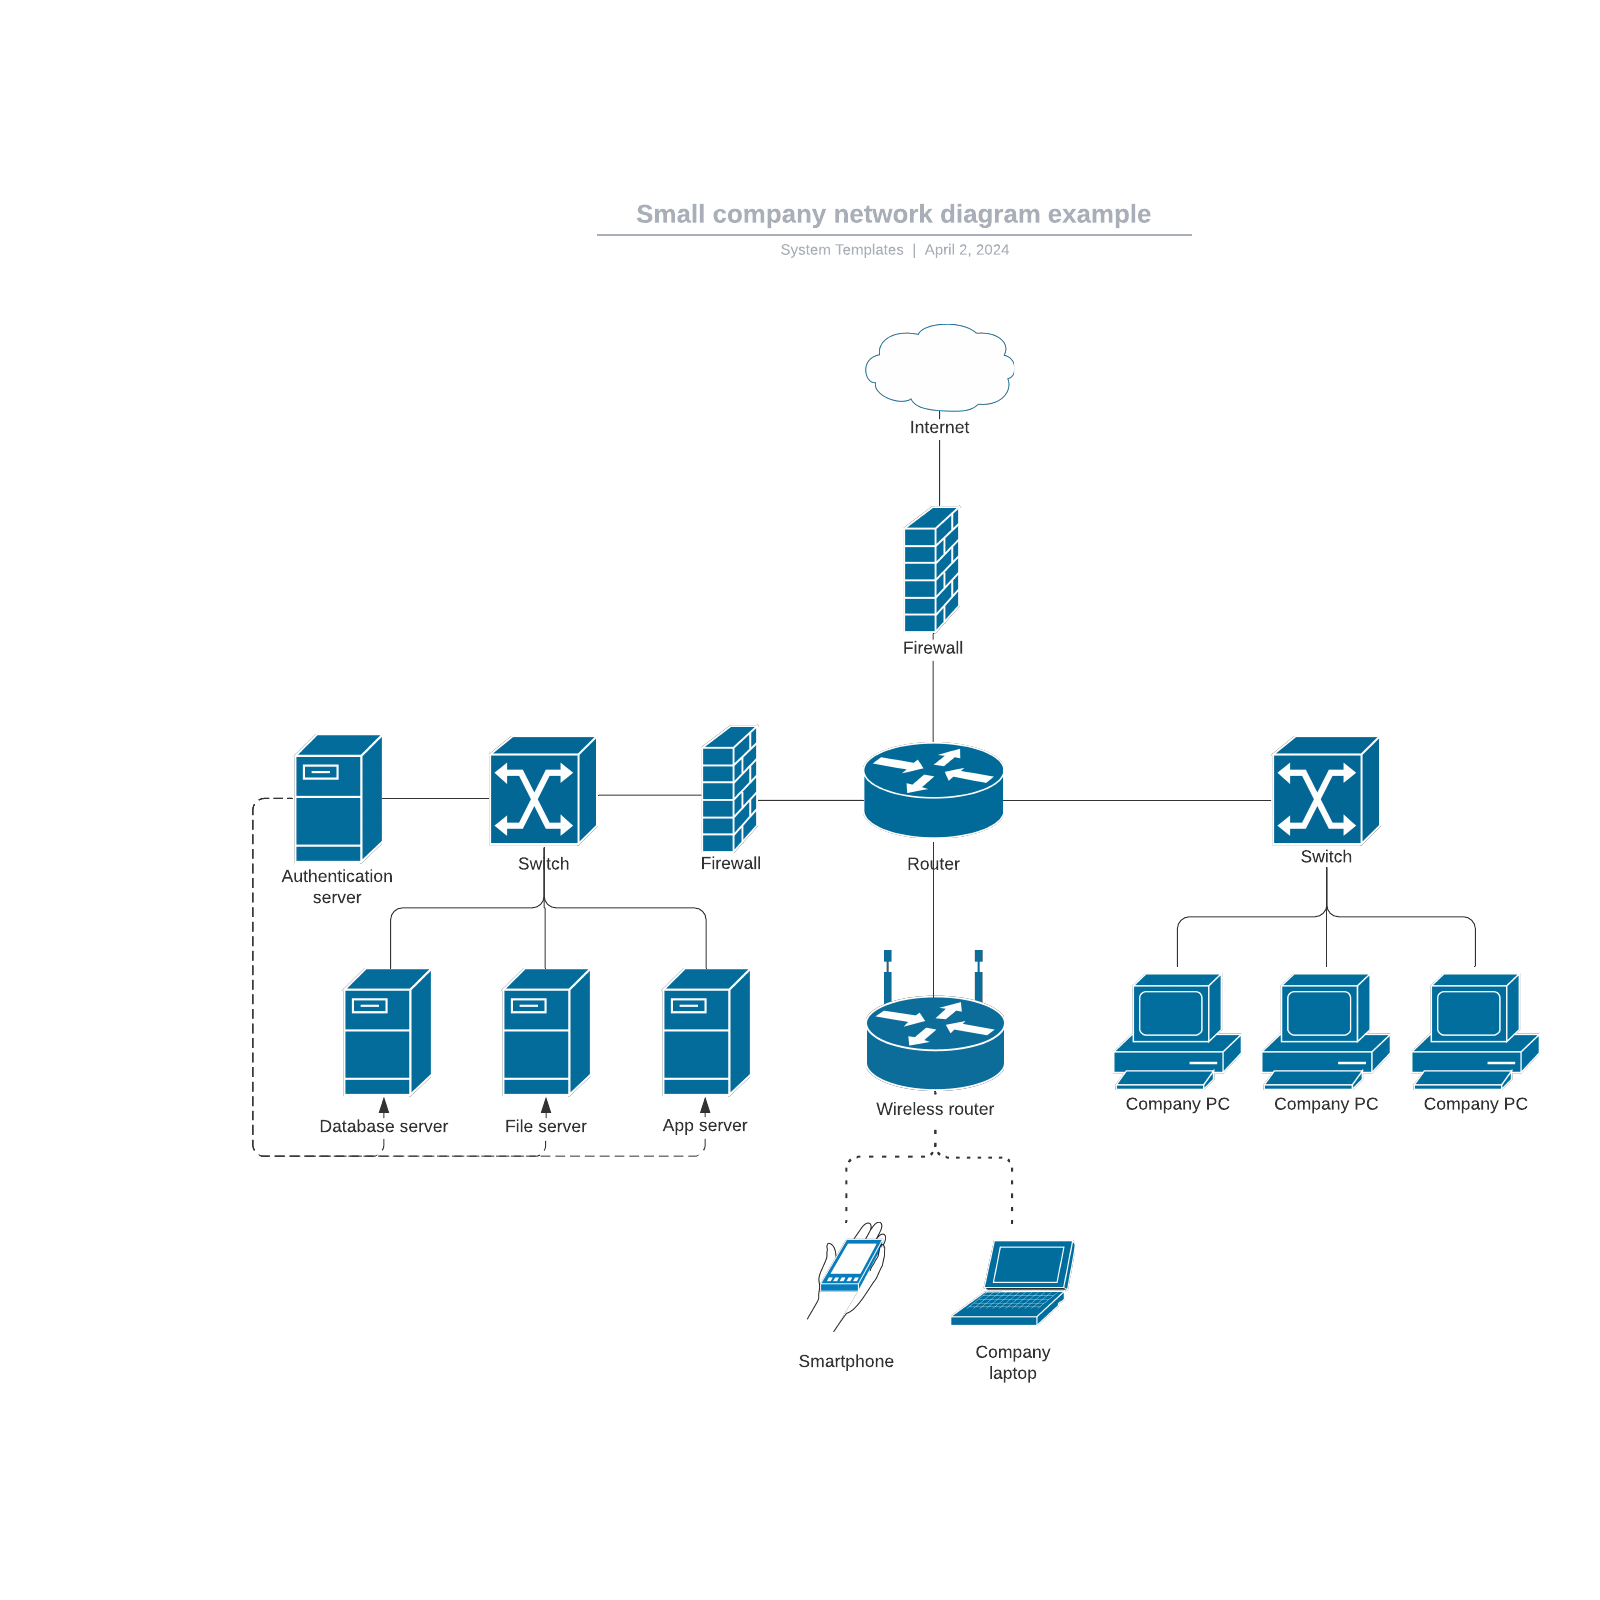 Small company network diagram example example